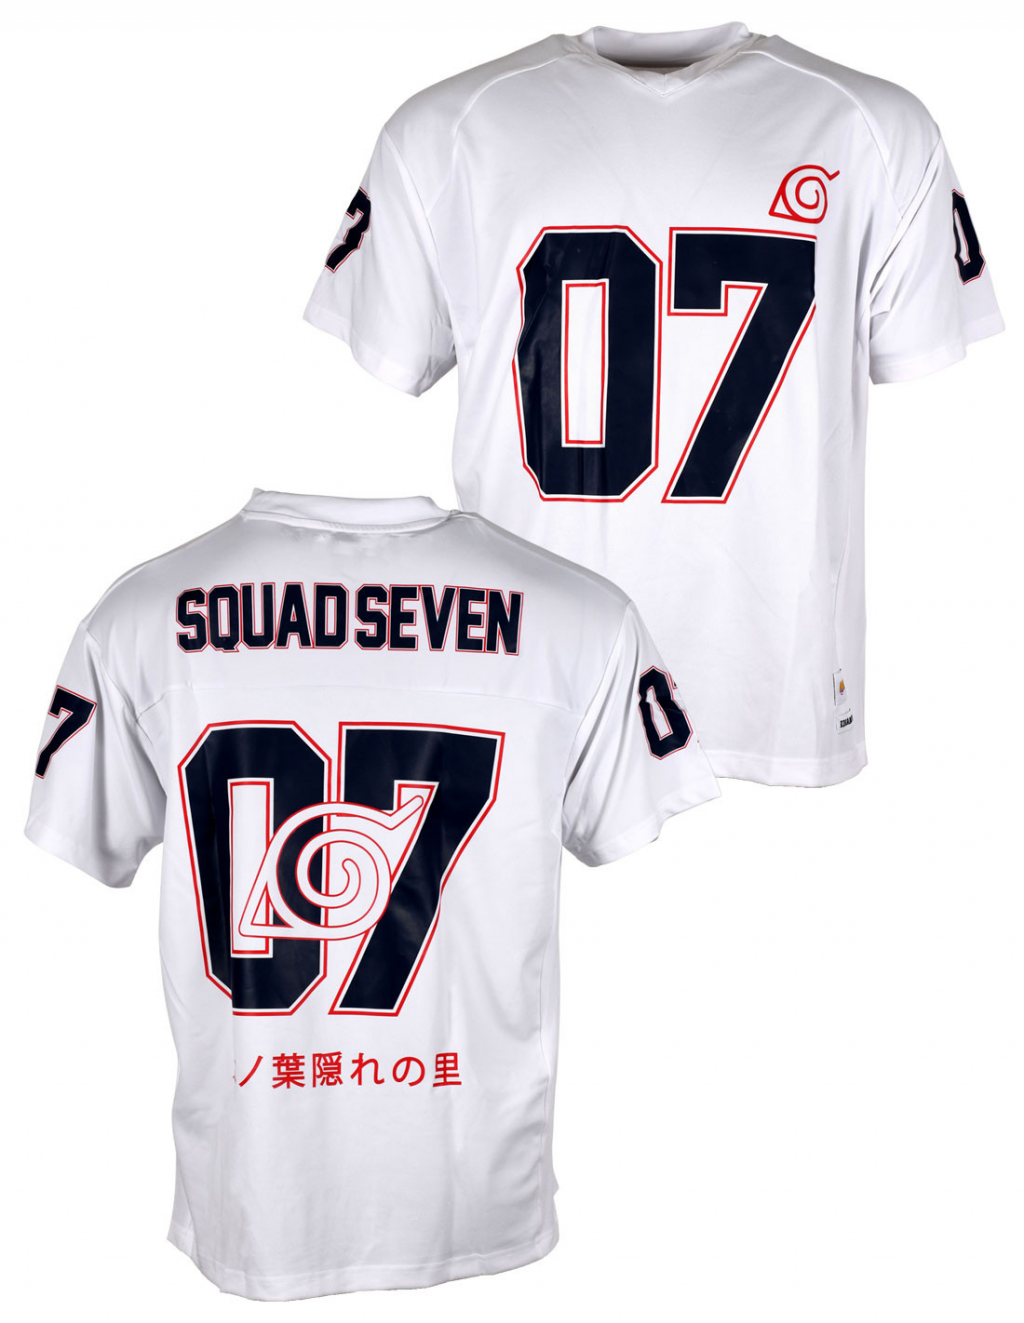 NARUTO - Squad Seven - T-Shirt Sports US Replica unisex (S)